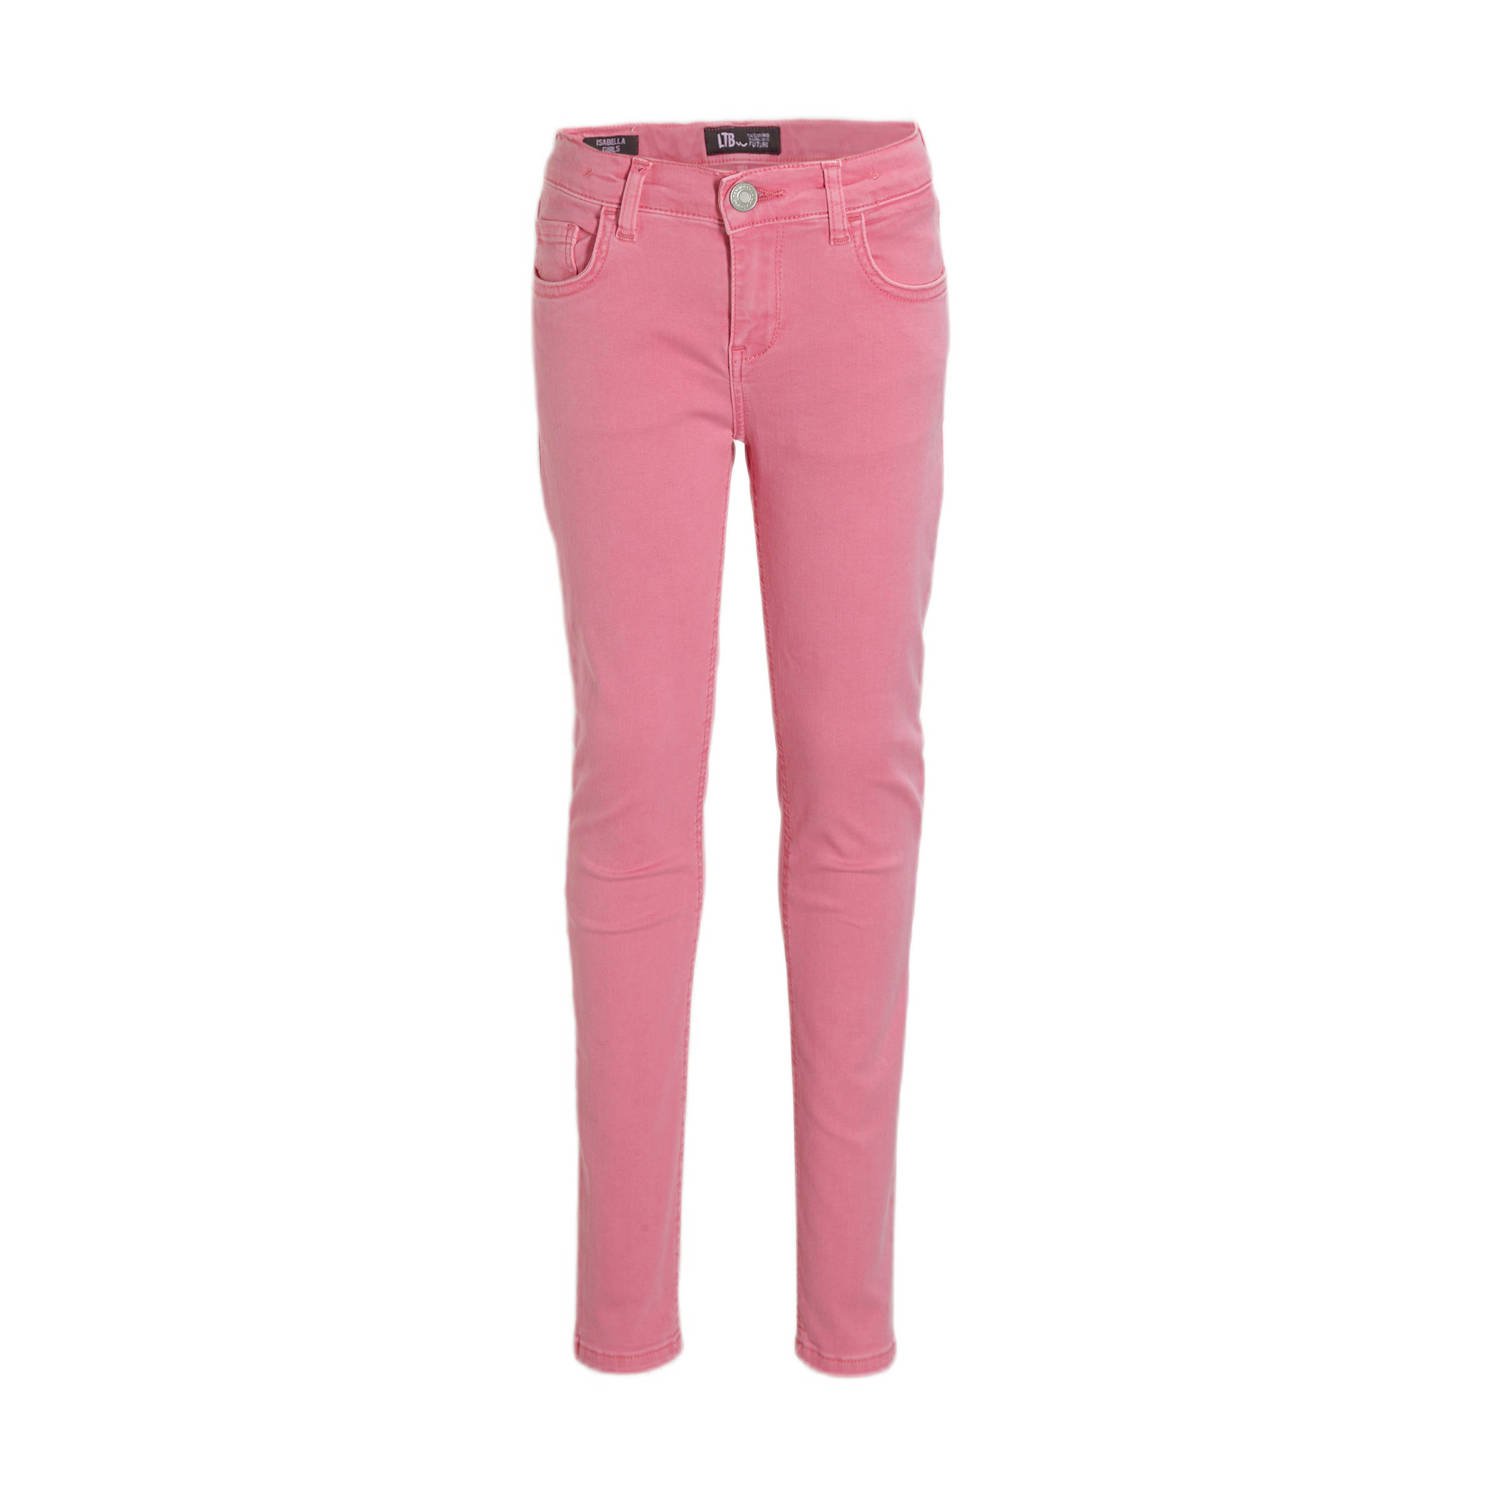 LTB skinny jeans ISABELLA G dark pink wash